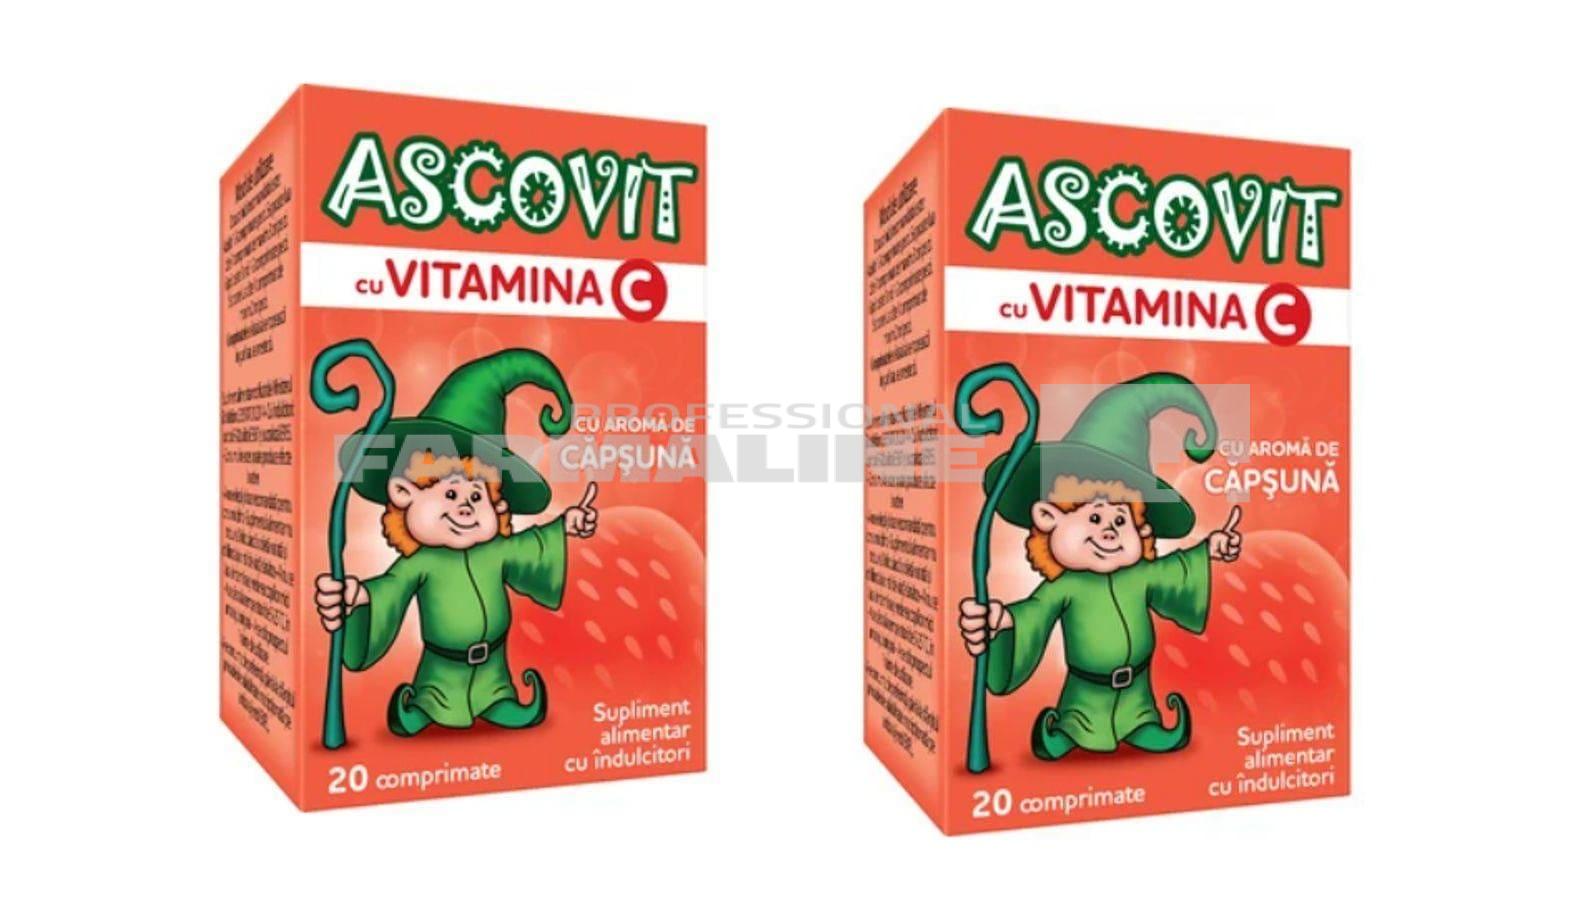 eliquis 5 mg farmacia la pret mic Ascovit cu aroma de capsuna 100 mg 20 comprimate Oferta 2 la pret de 1